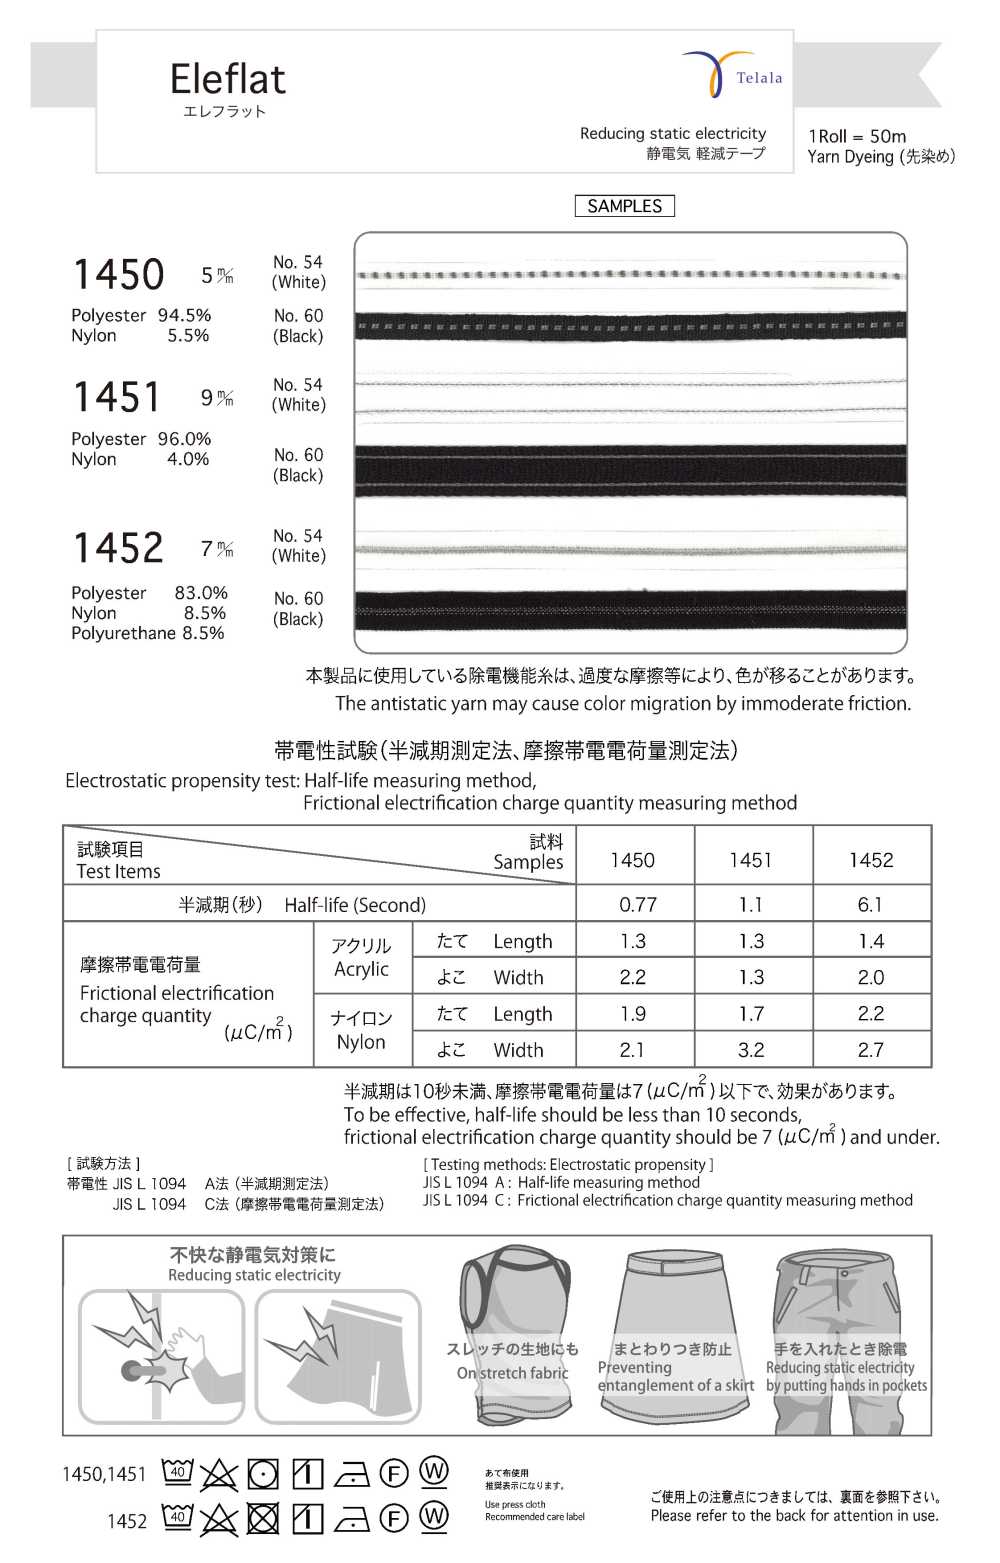 1451 Eleflat[Bandbandschnur] Telala (Inoue-Bandindustrie)